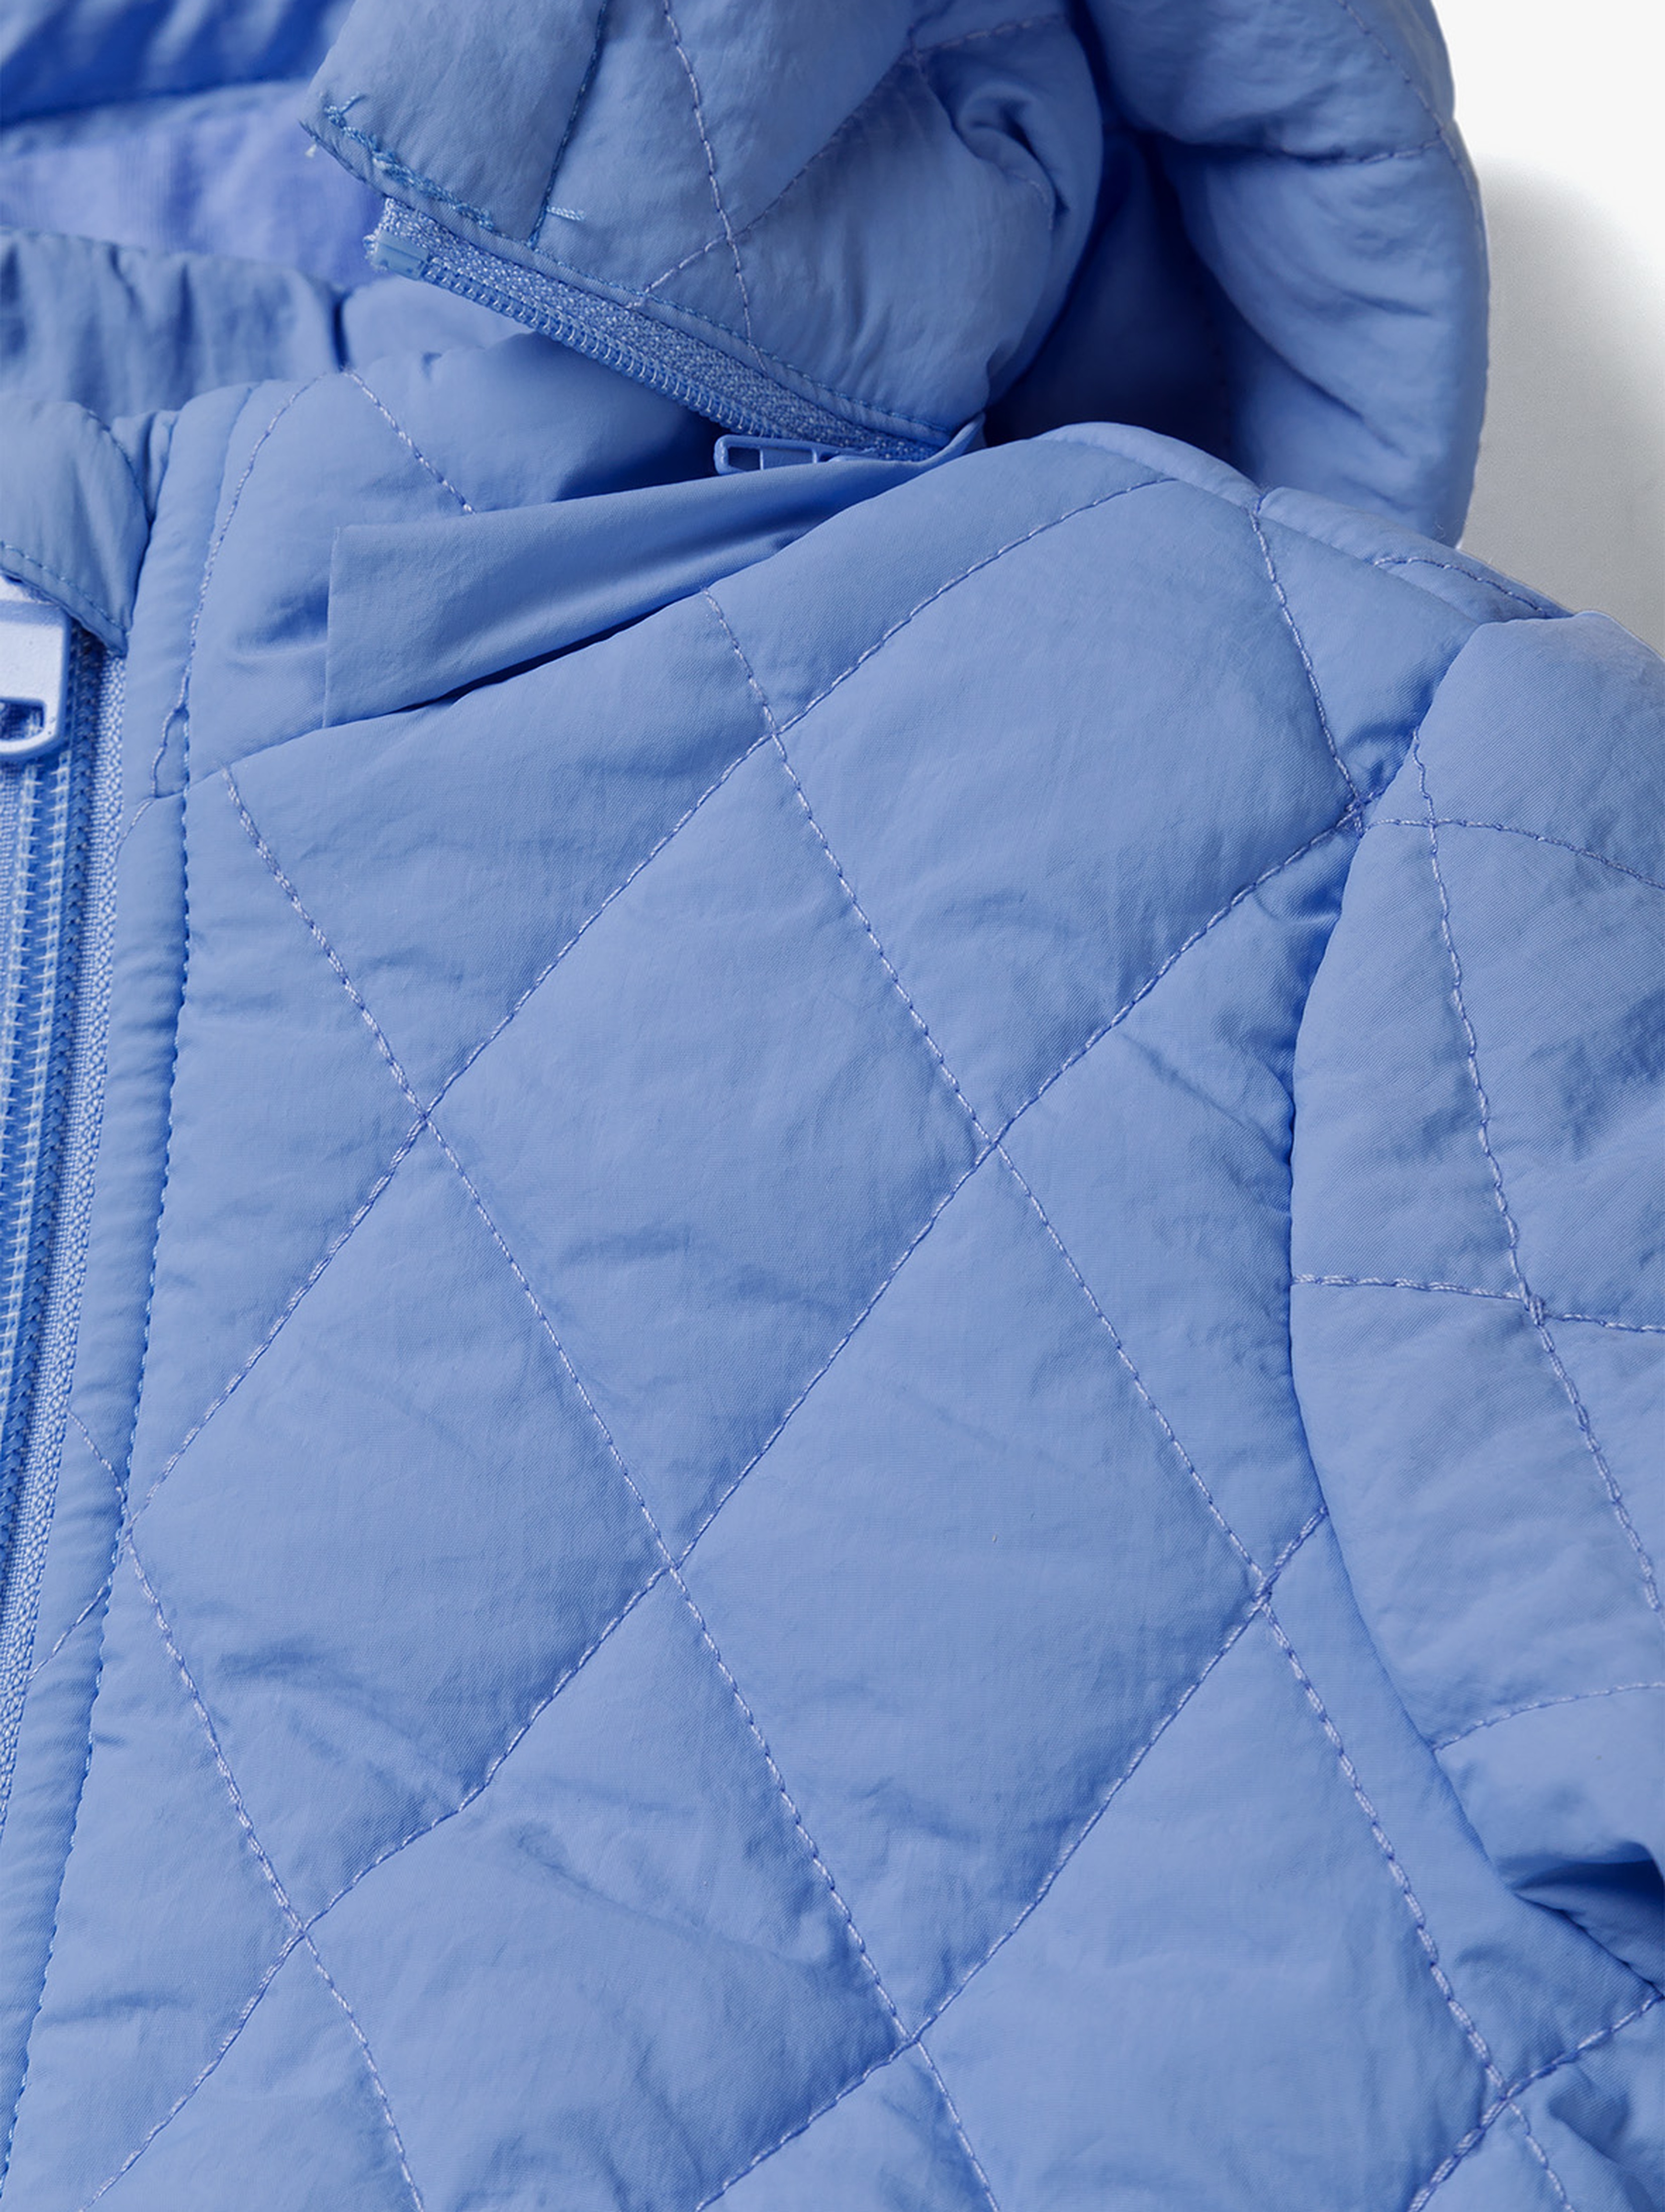 Niebieska pikowana kurtka niemowlęca z kapturem - 5.10.15.